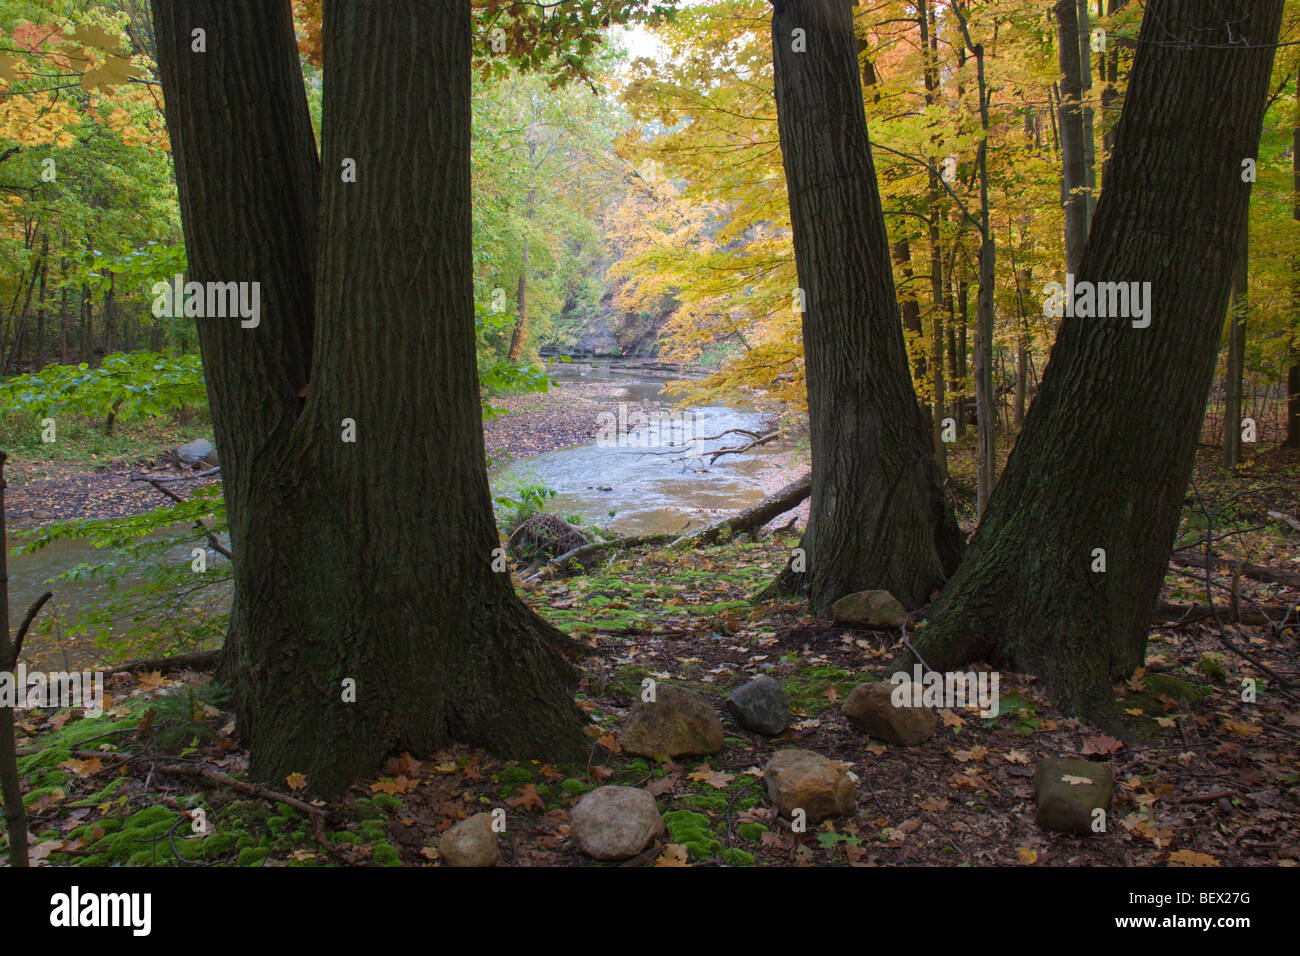 Fall foliage along the Rocky River, Ohio Stock Photo